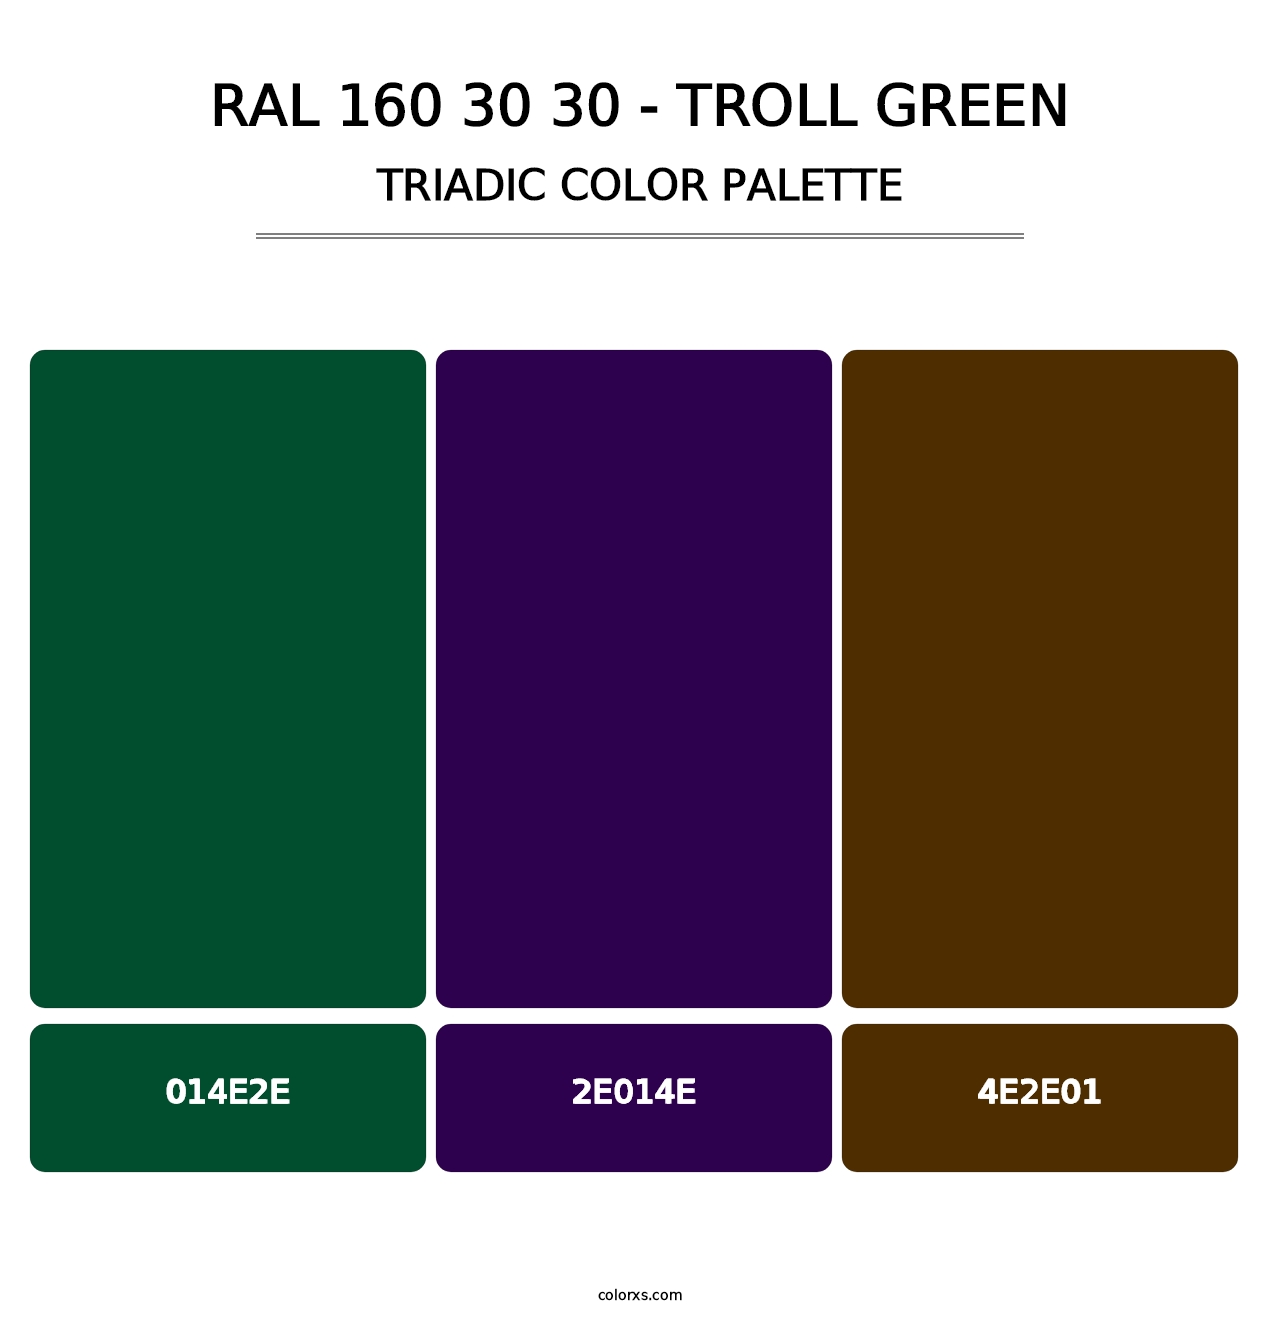 RAL 160 30 30 - Troll Green - Triadic Color Palette